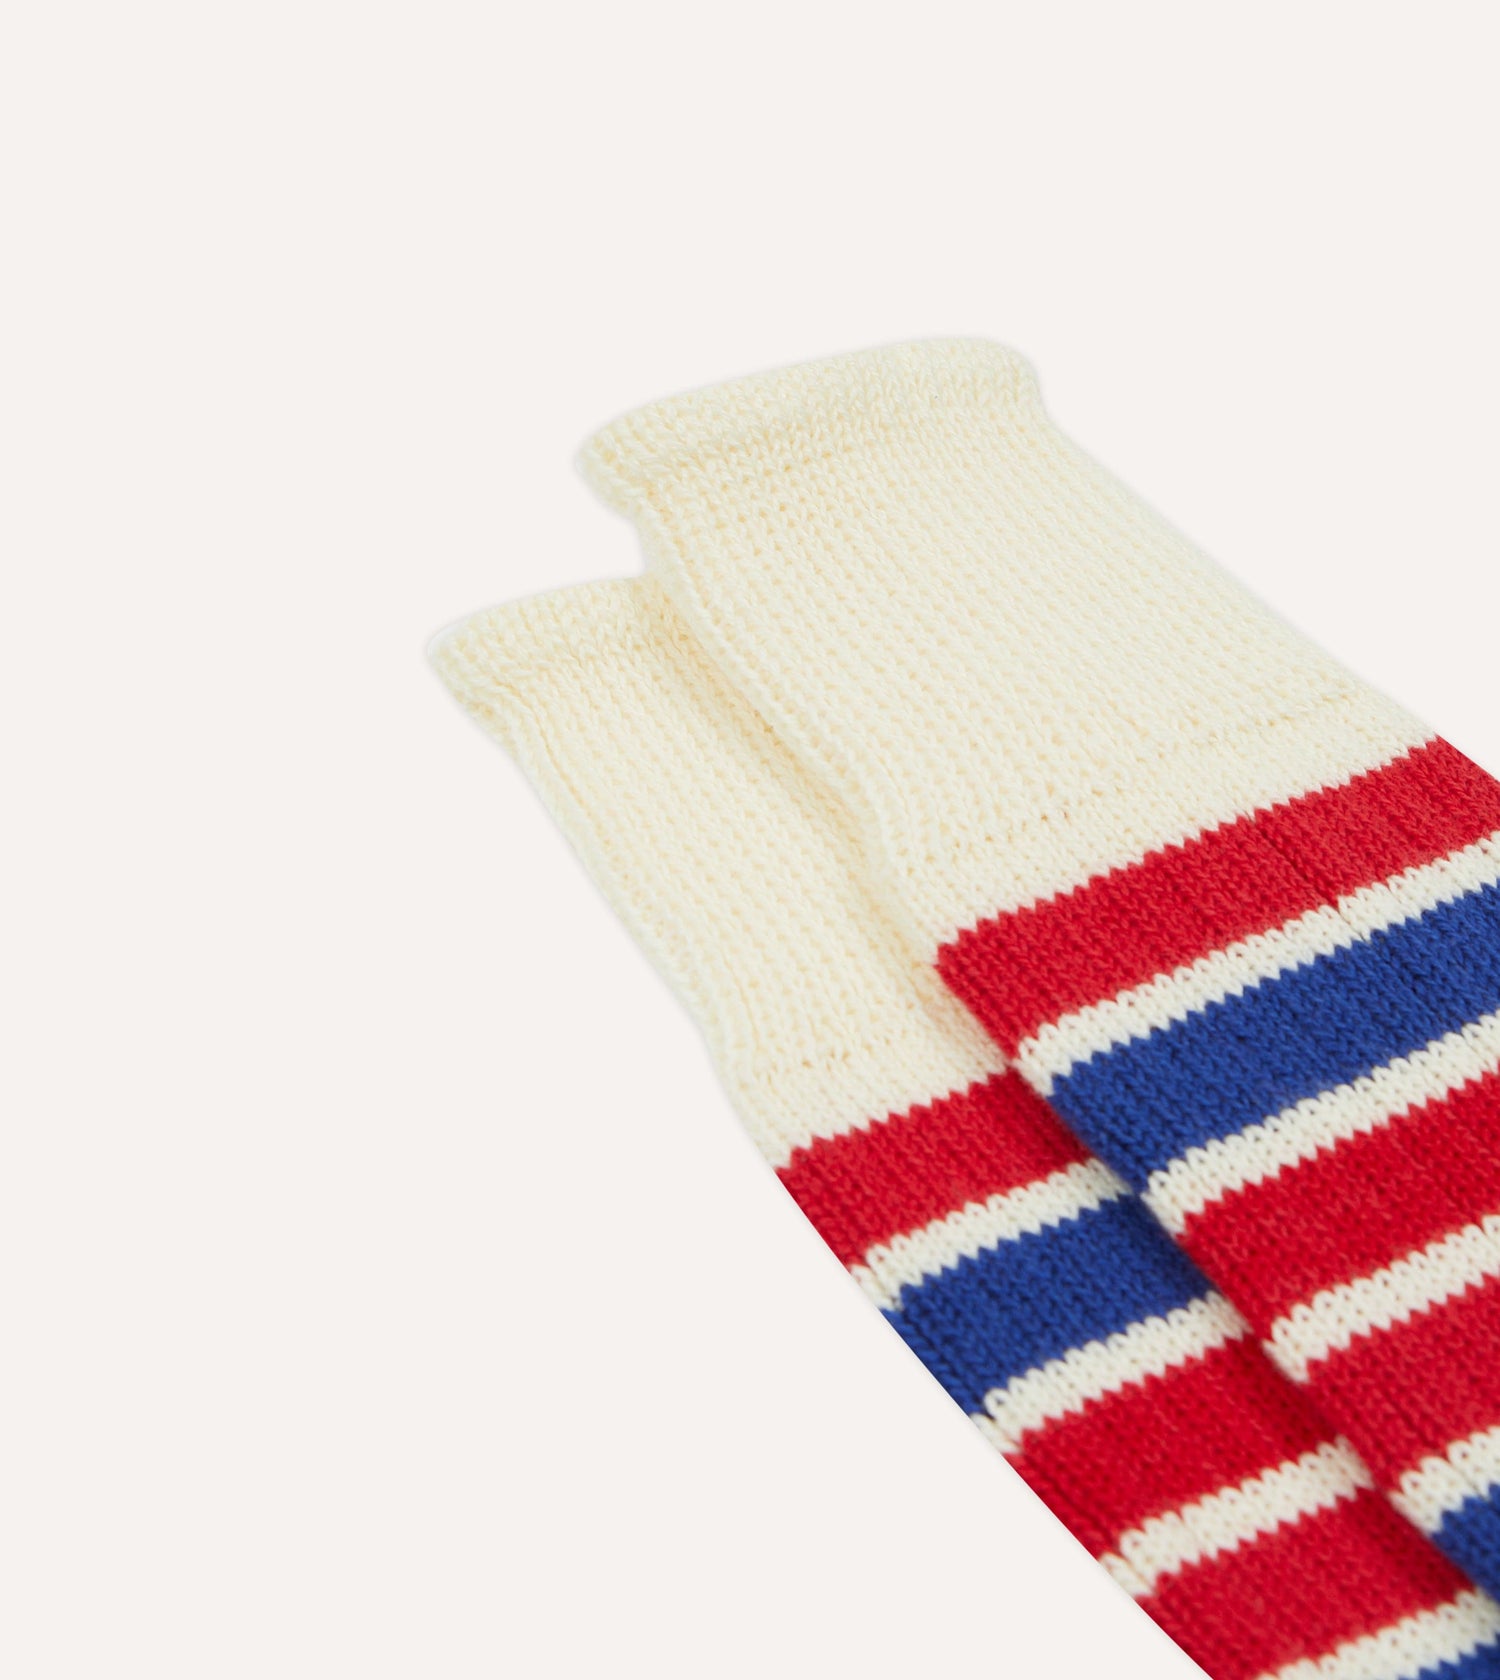 Ecru and Red Striped Cotton Sports Sock